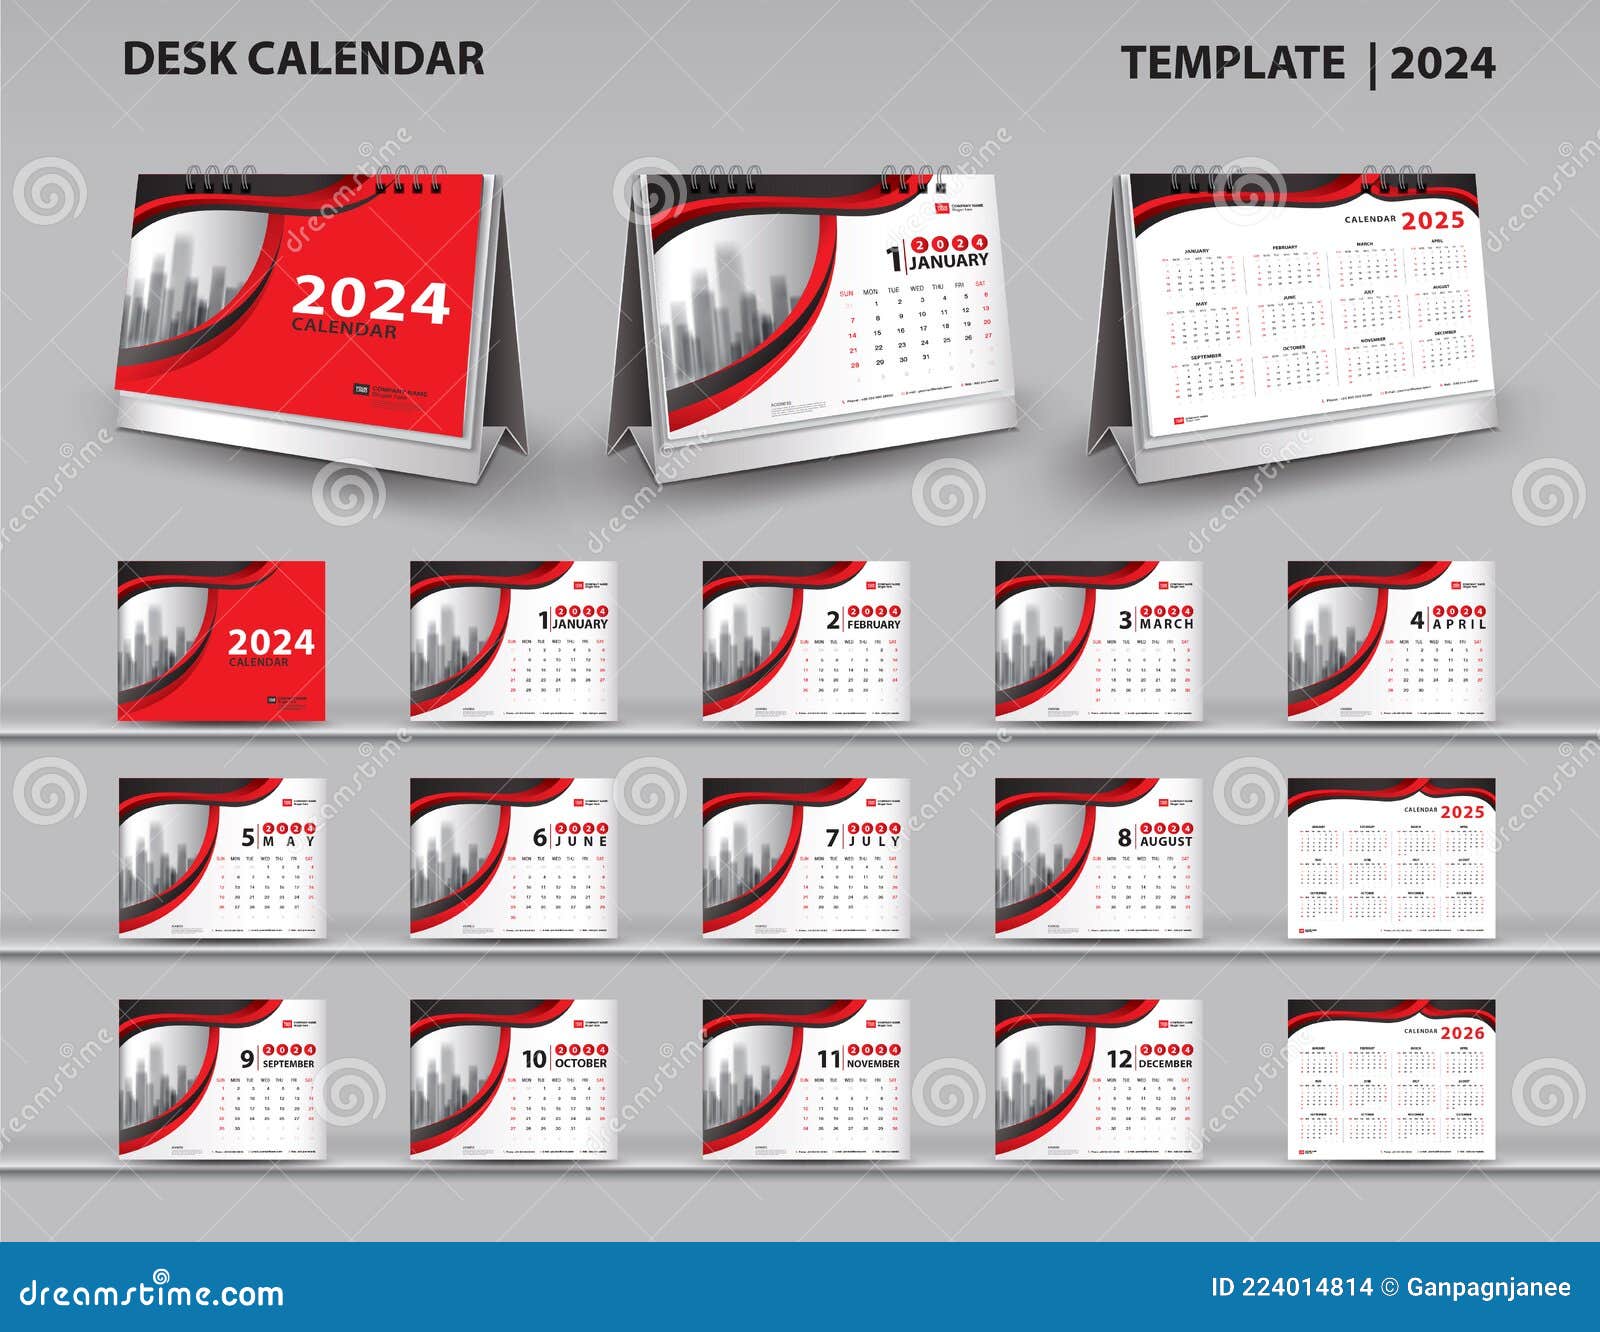 set-desk-calendar-2024-template-vector-and-desk-calendar-3d-mockup-calendar-2025-2026-template